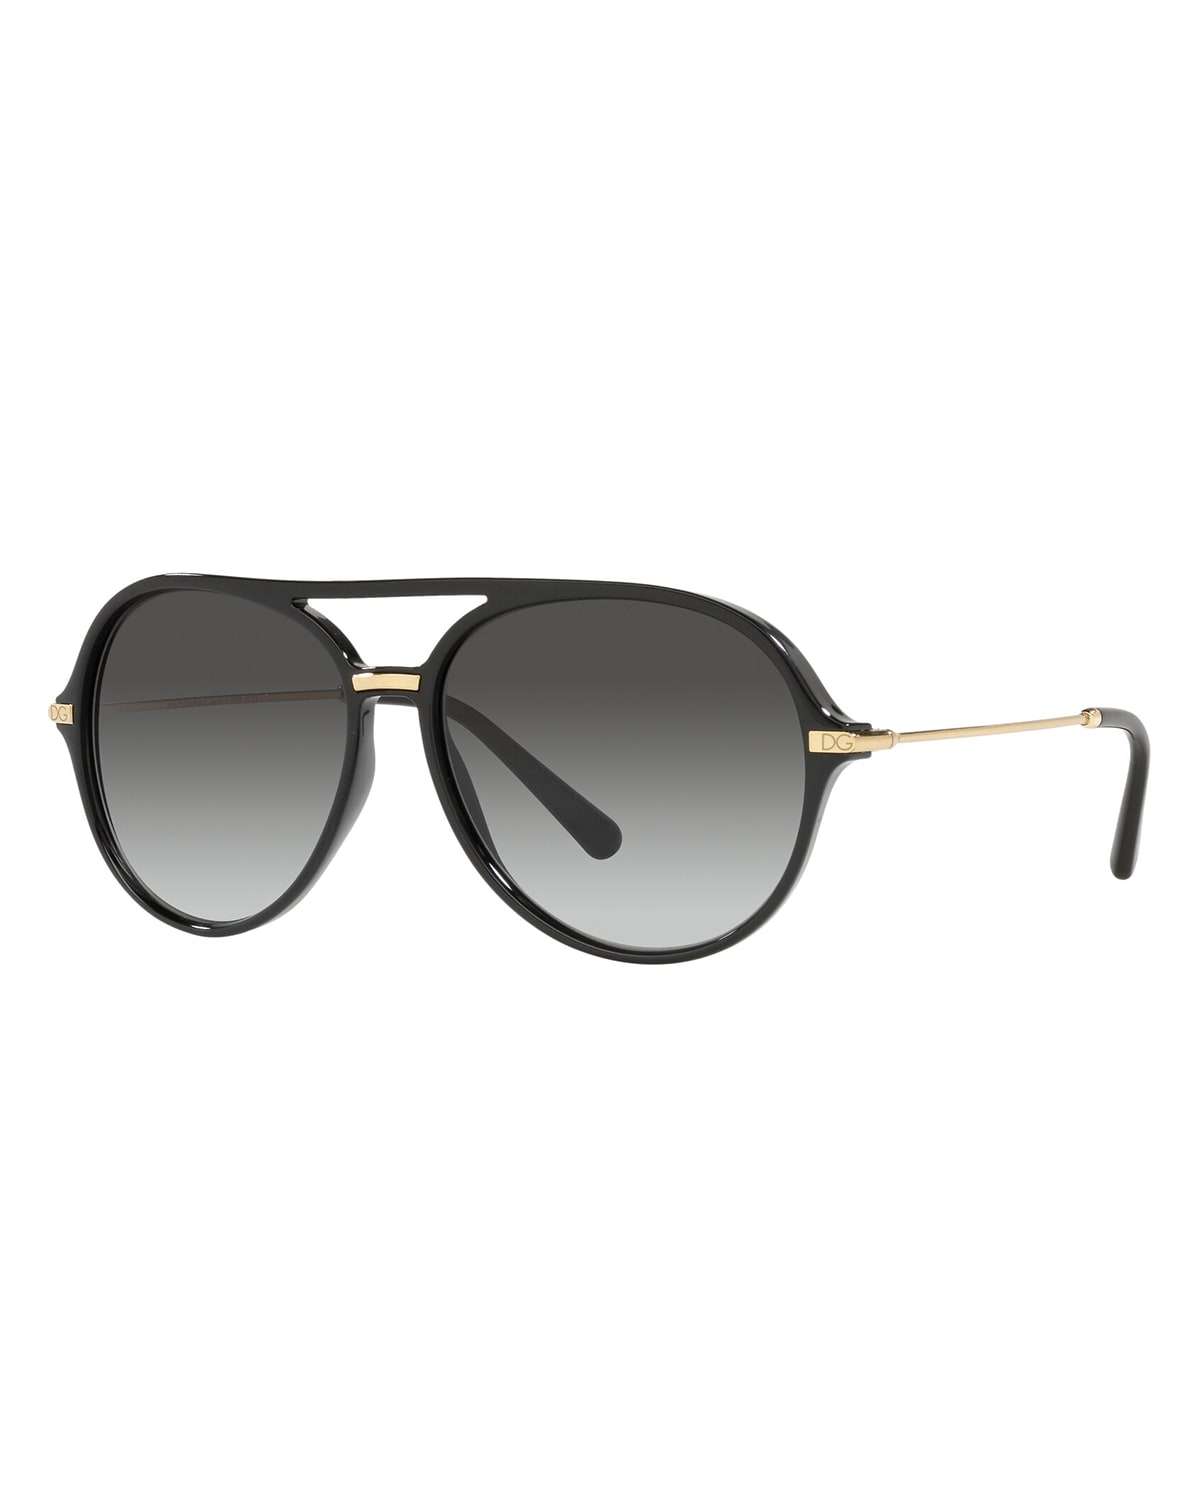 Dolce & Gabbana Round Scalloped Metal Frame Sunglasses | Neiman Marcus